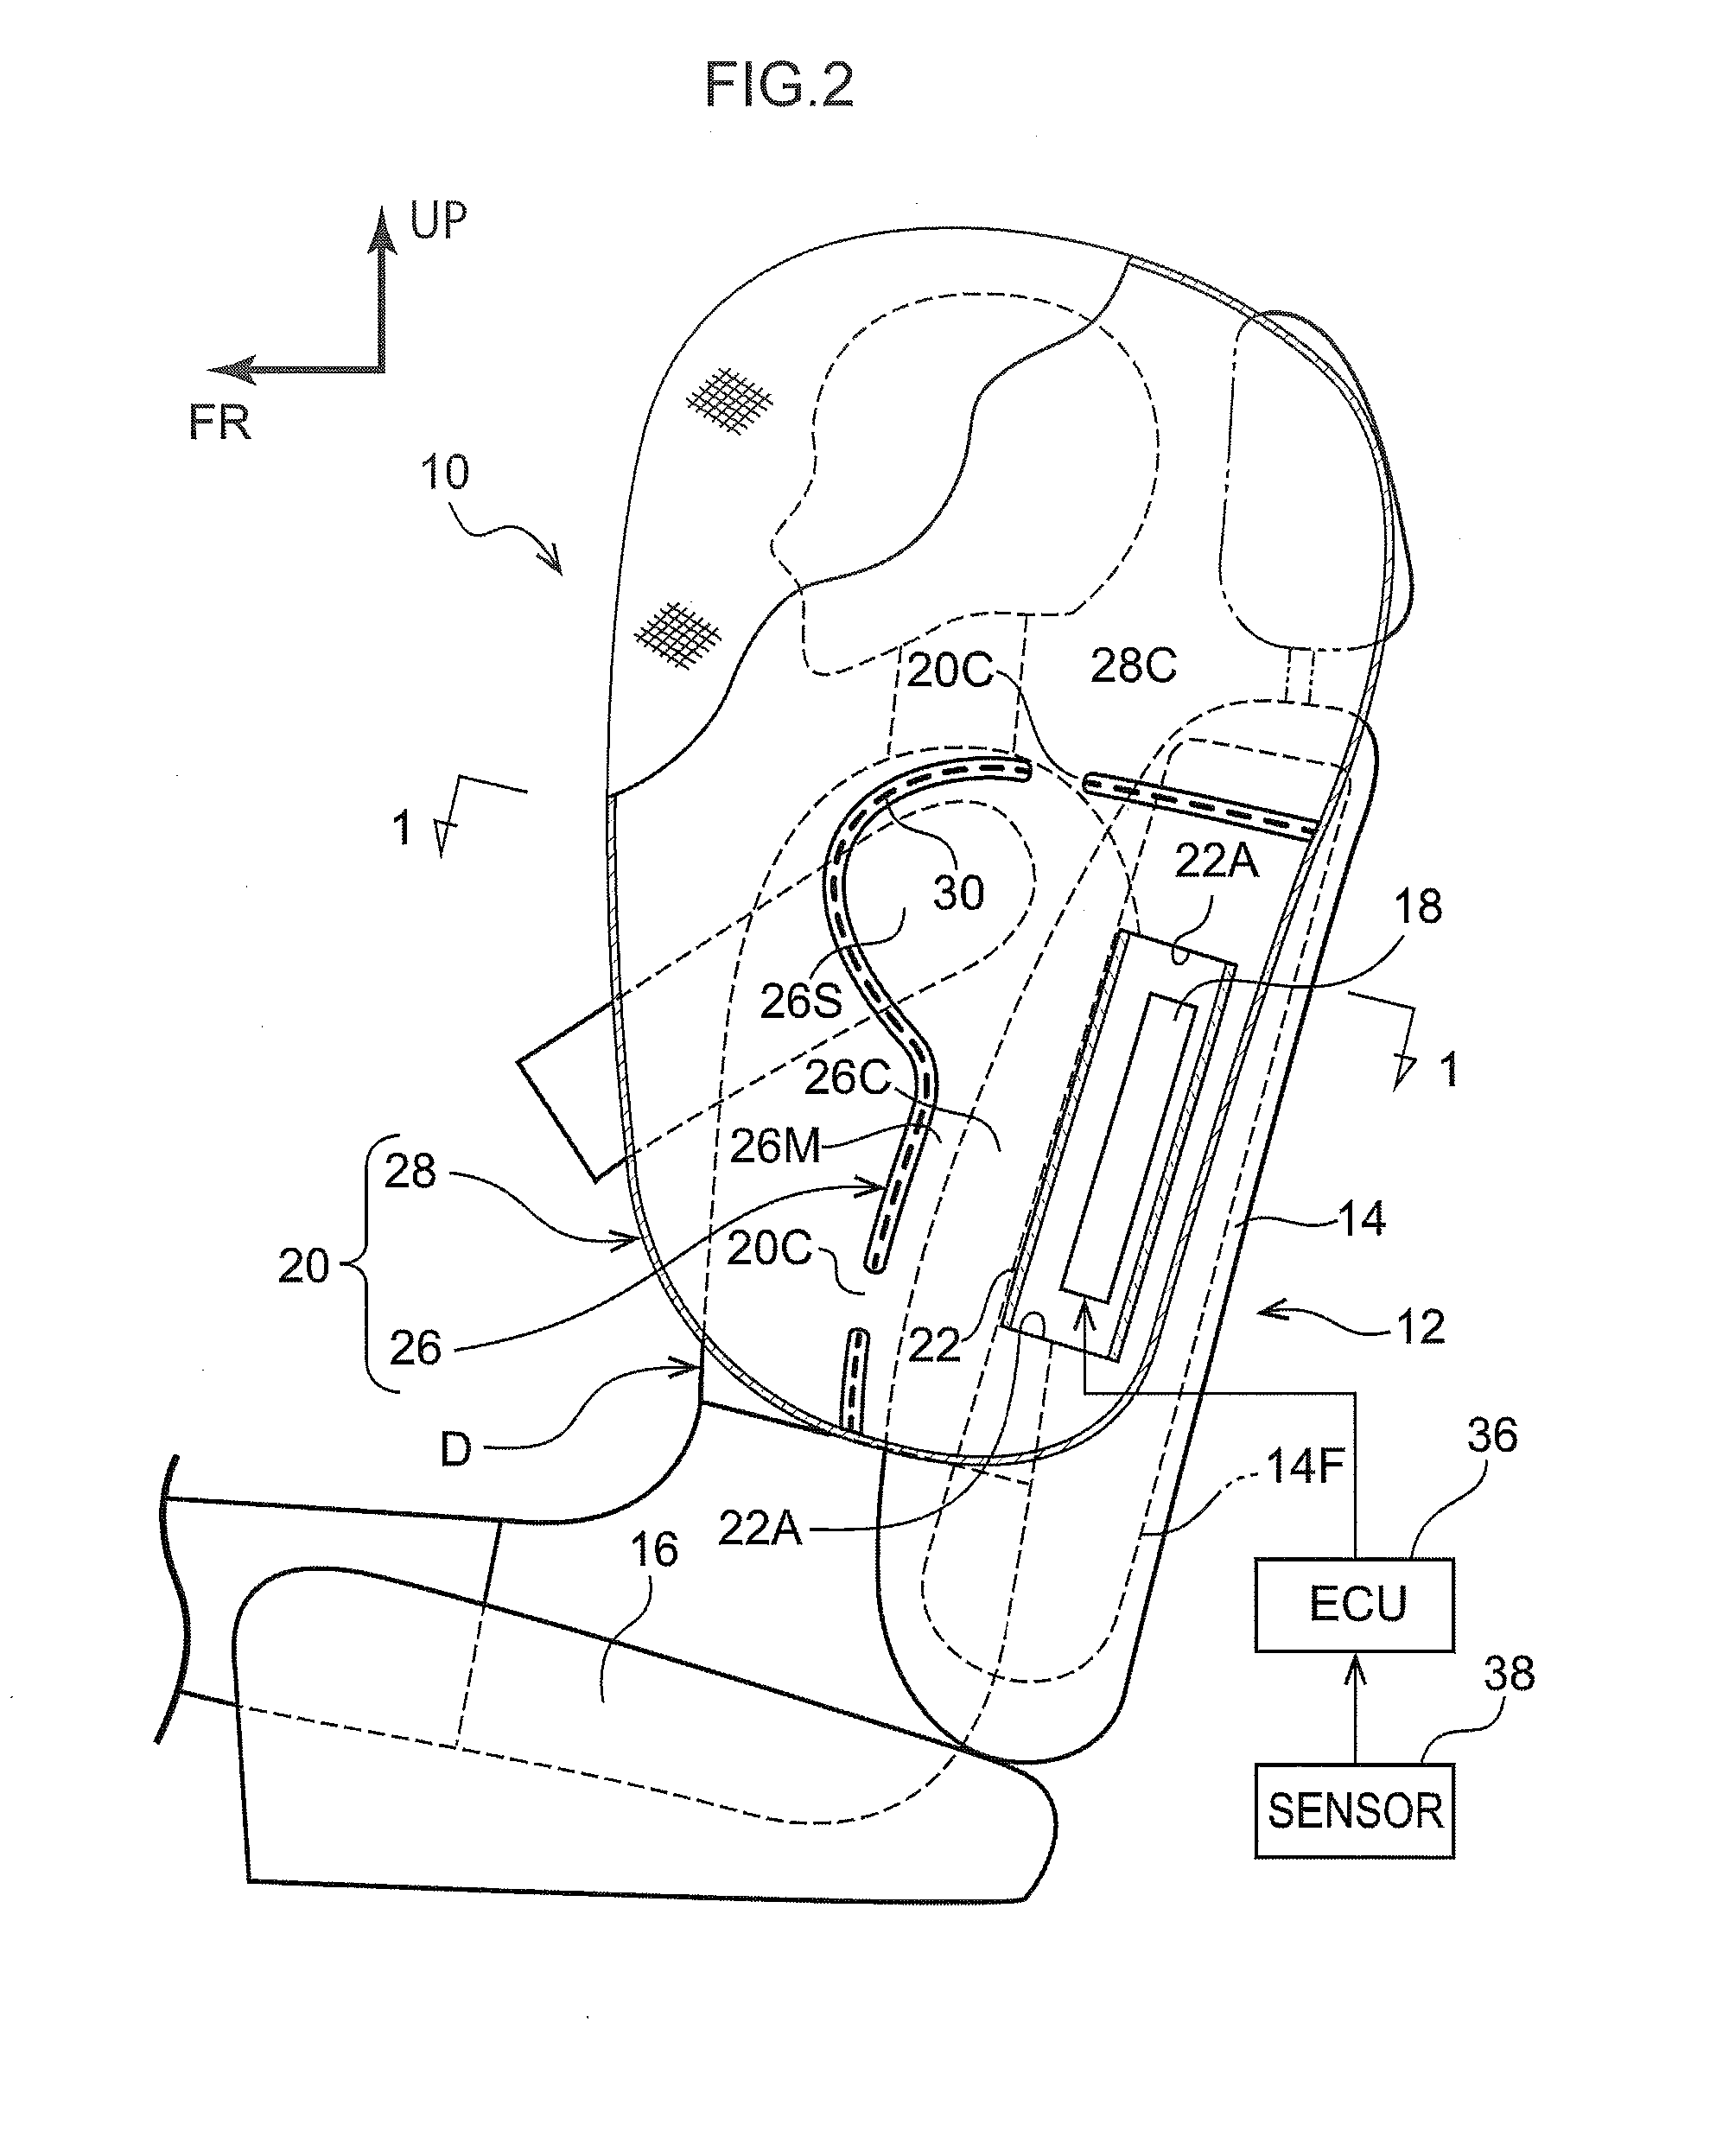 Far side airbag device